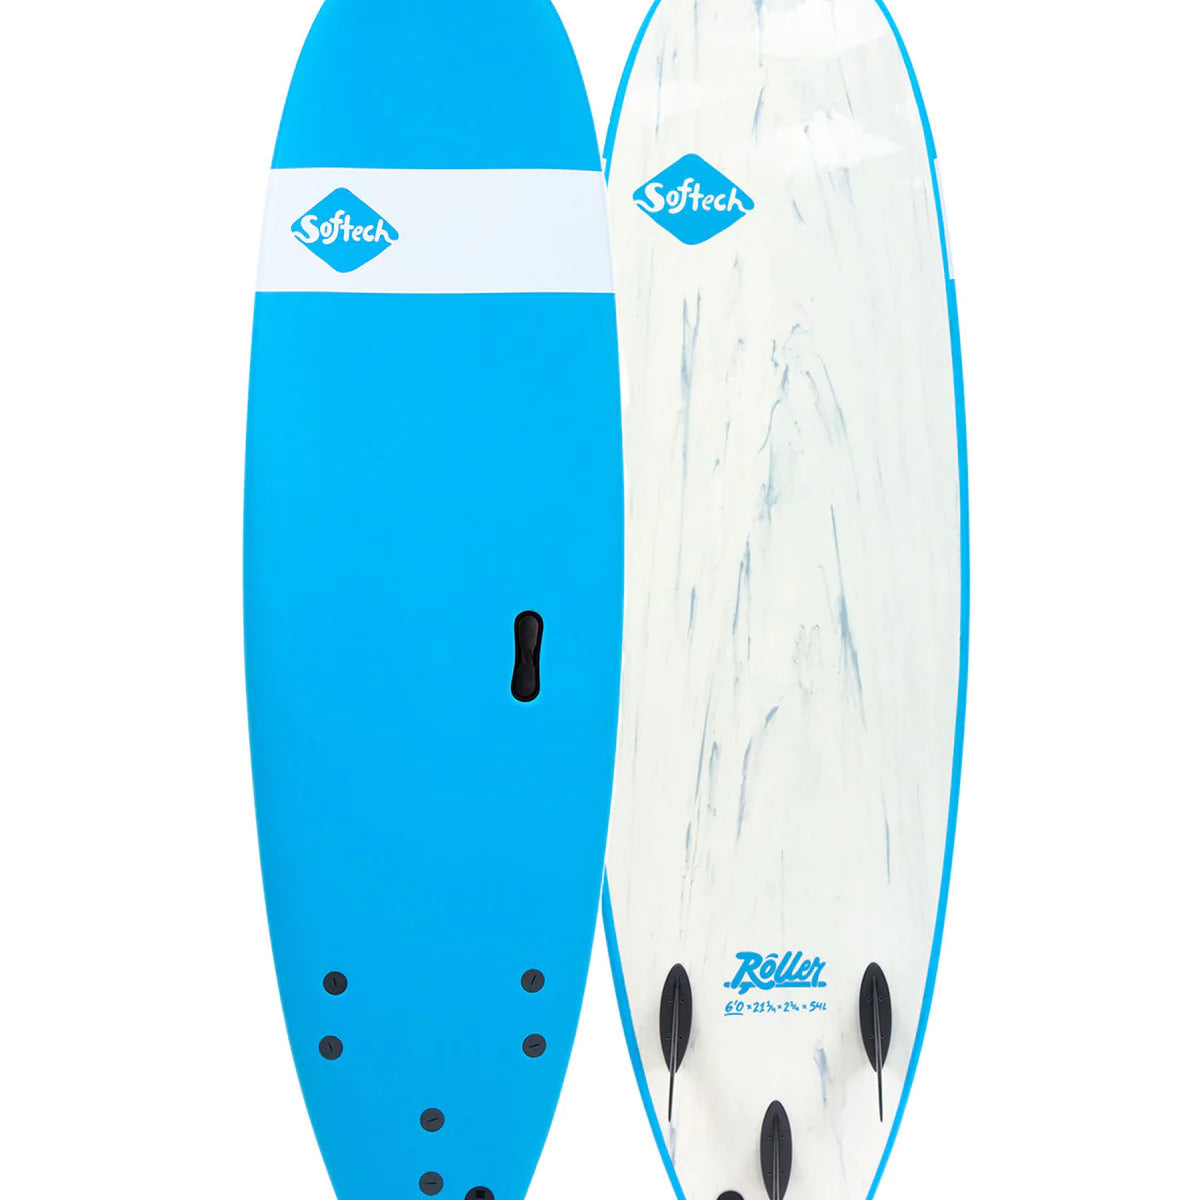 Softech Roller Soft Surfboard Blue 7ft0in